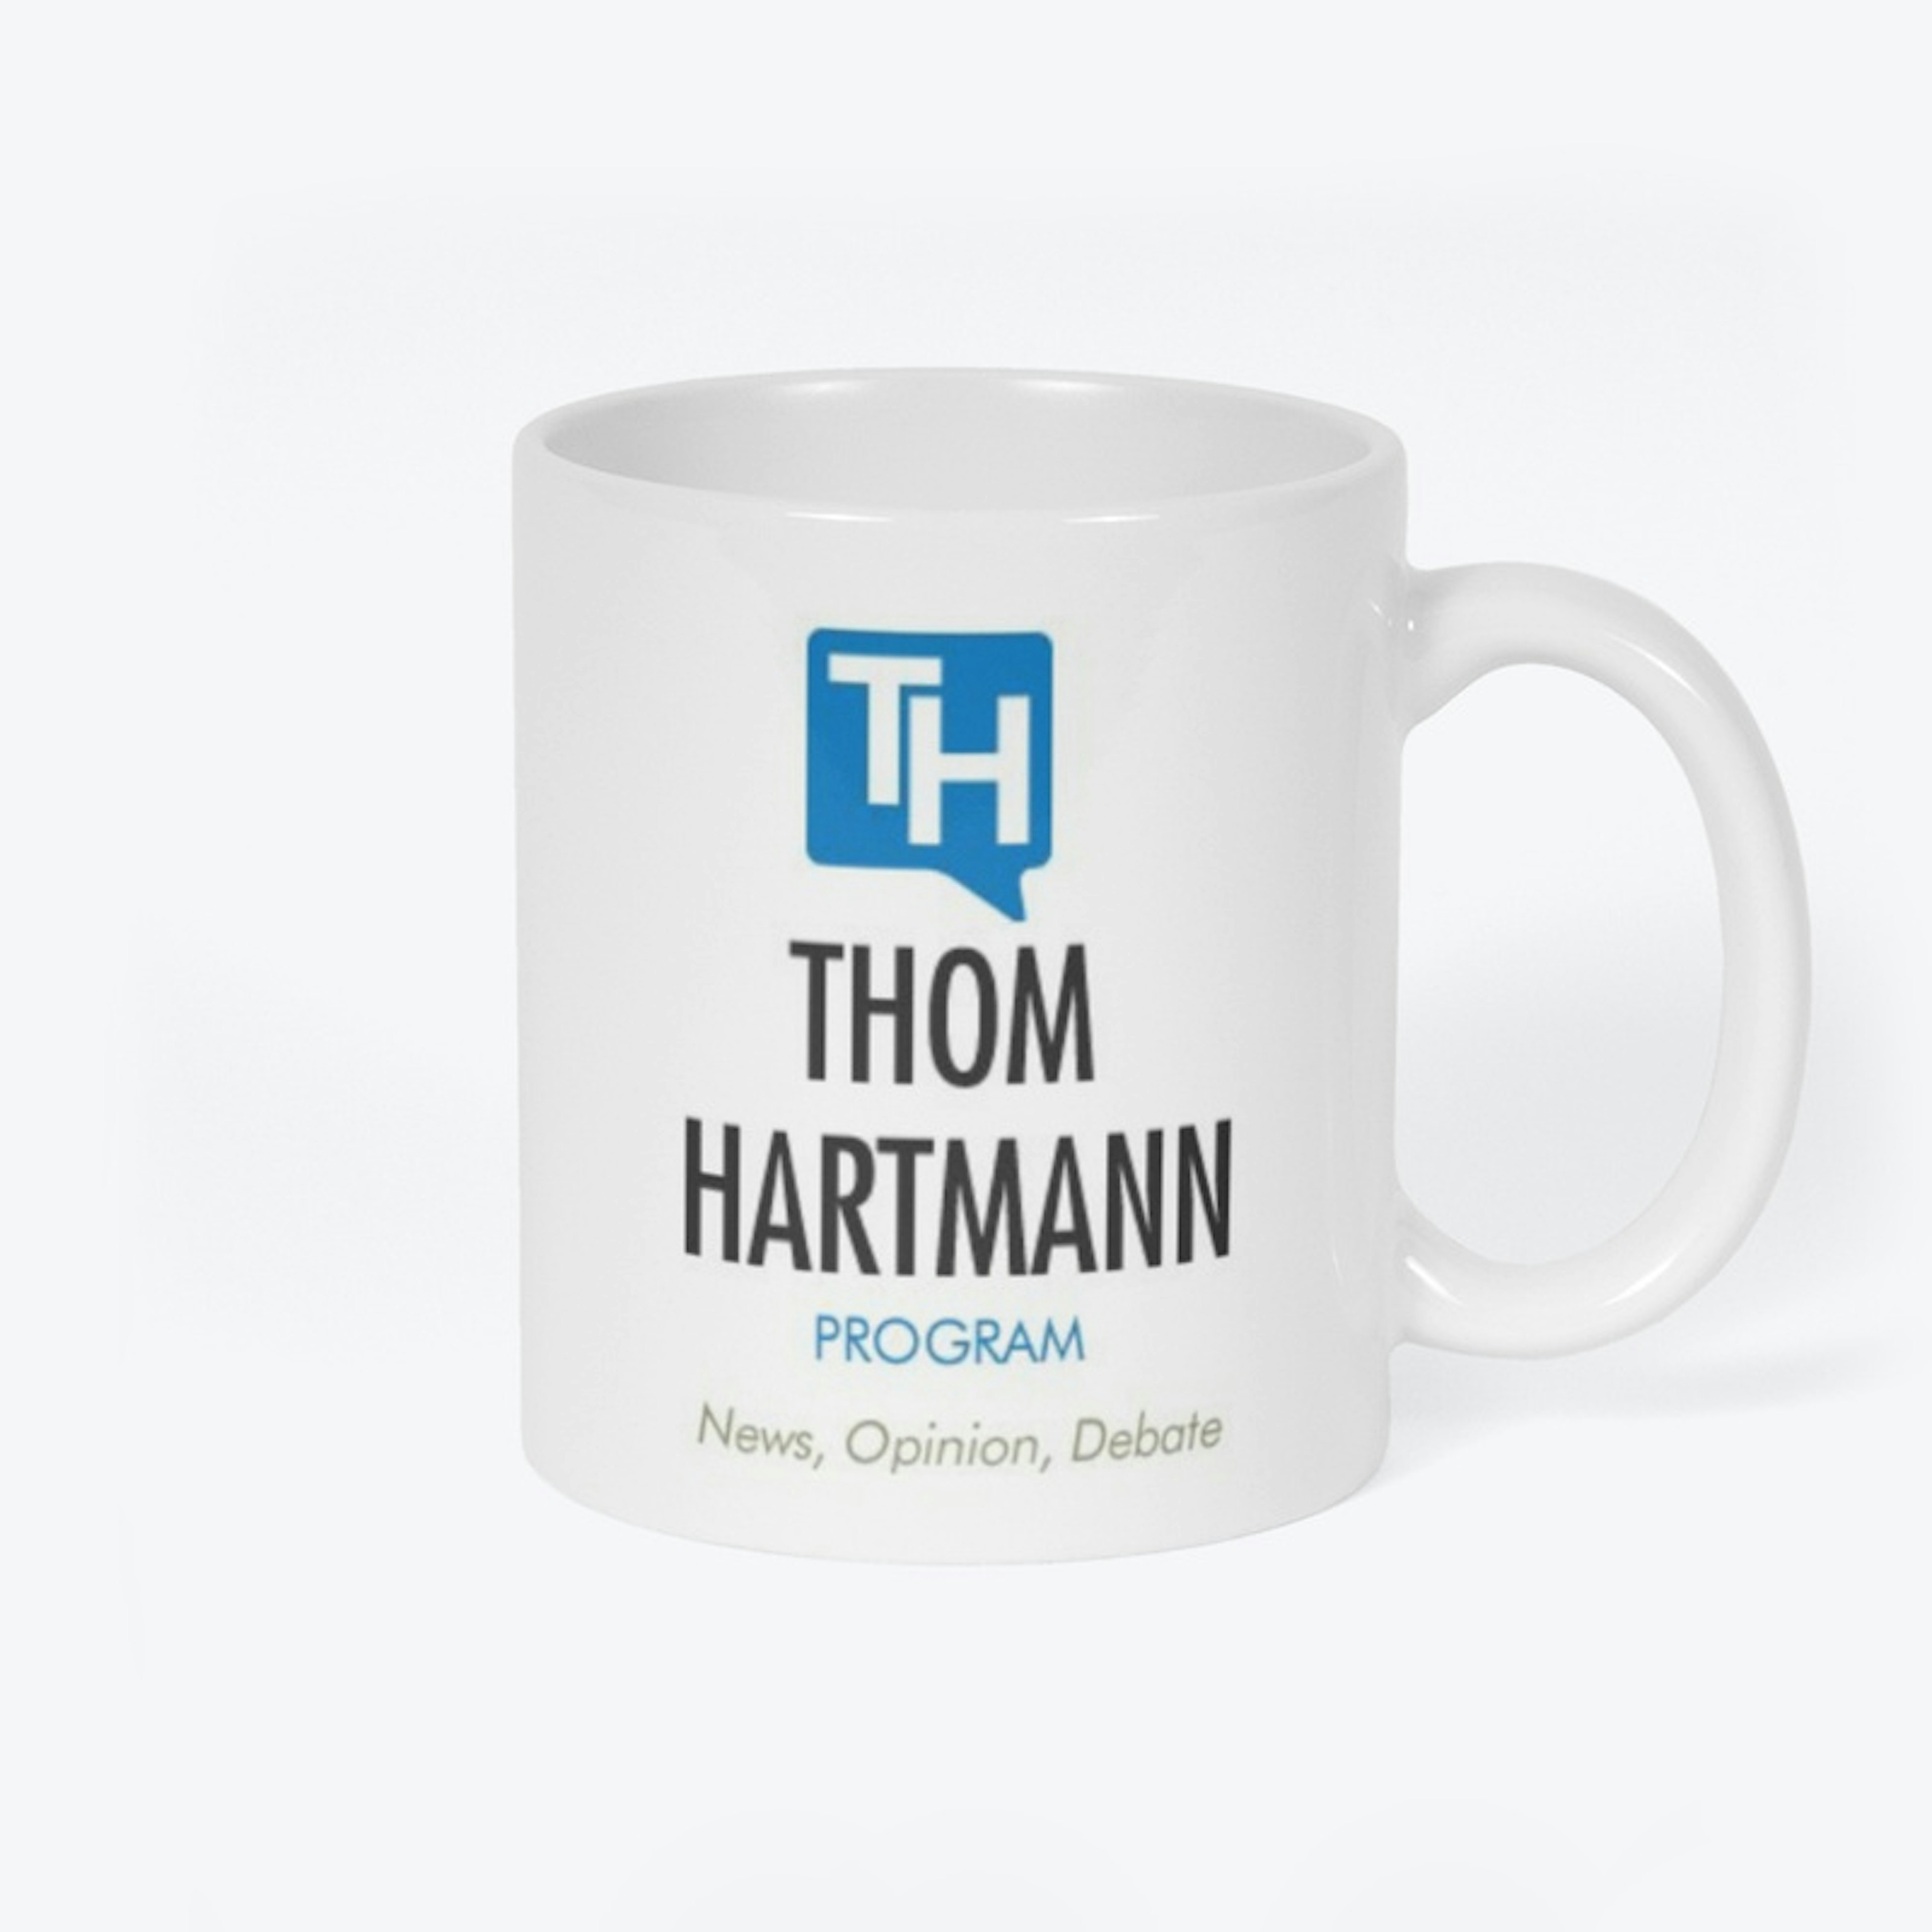 The Official Thom Hartmann Program Mug